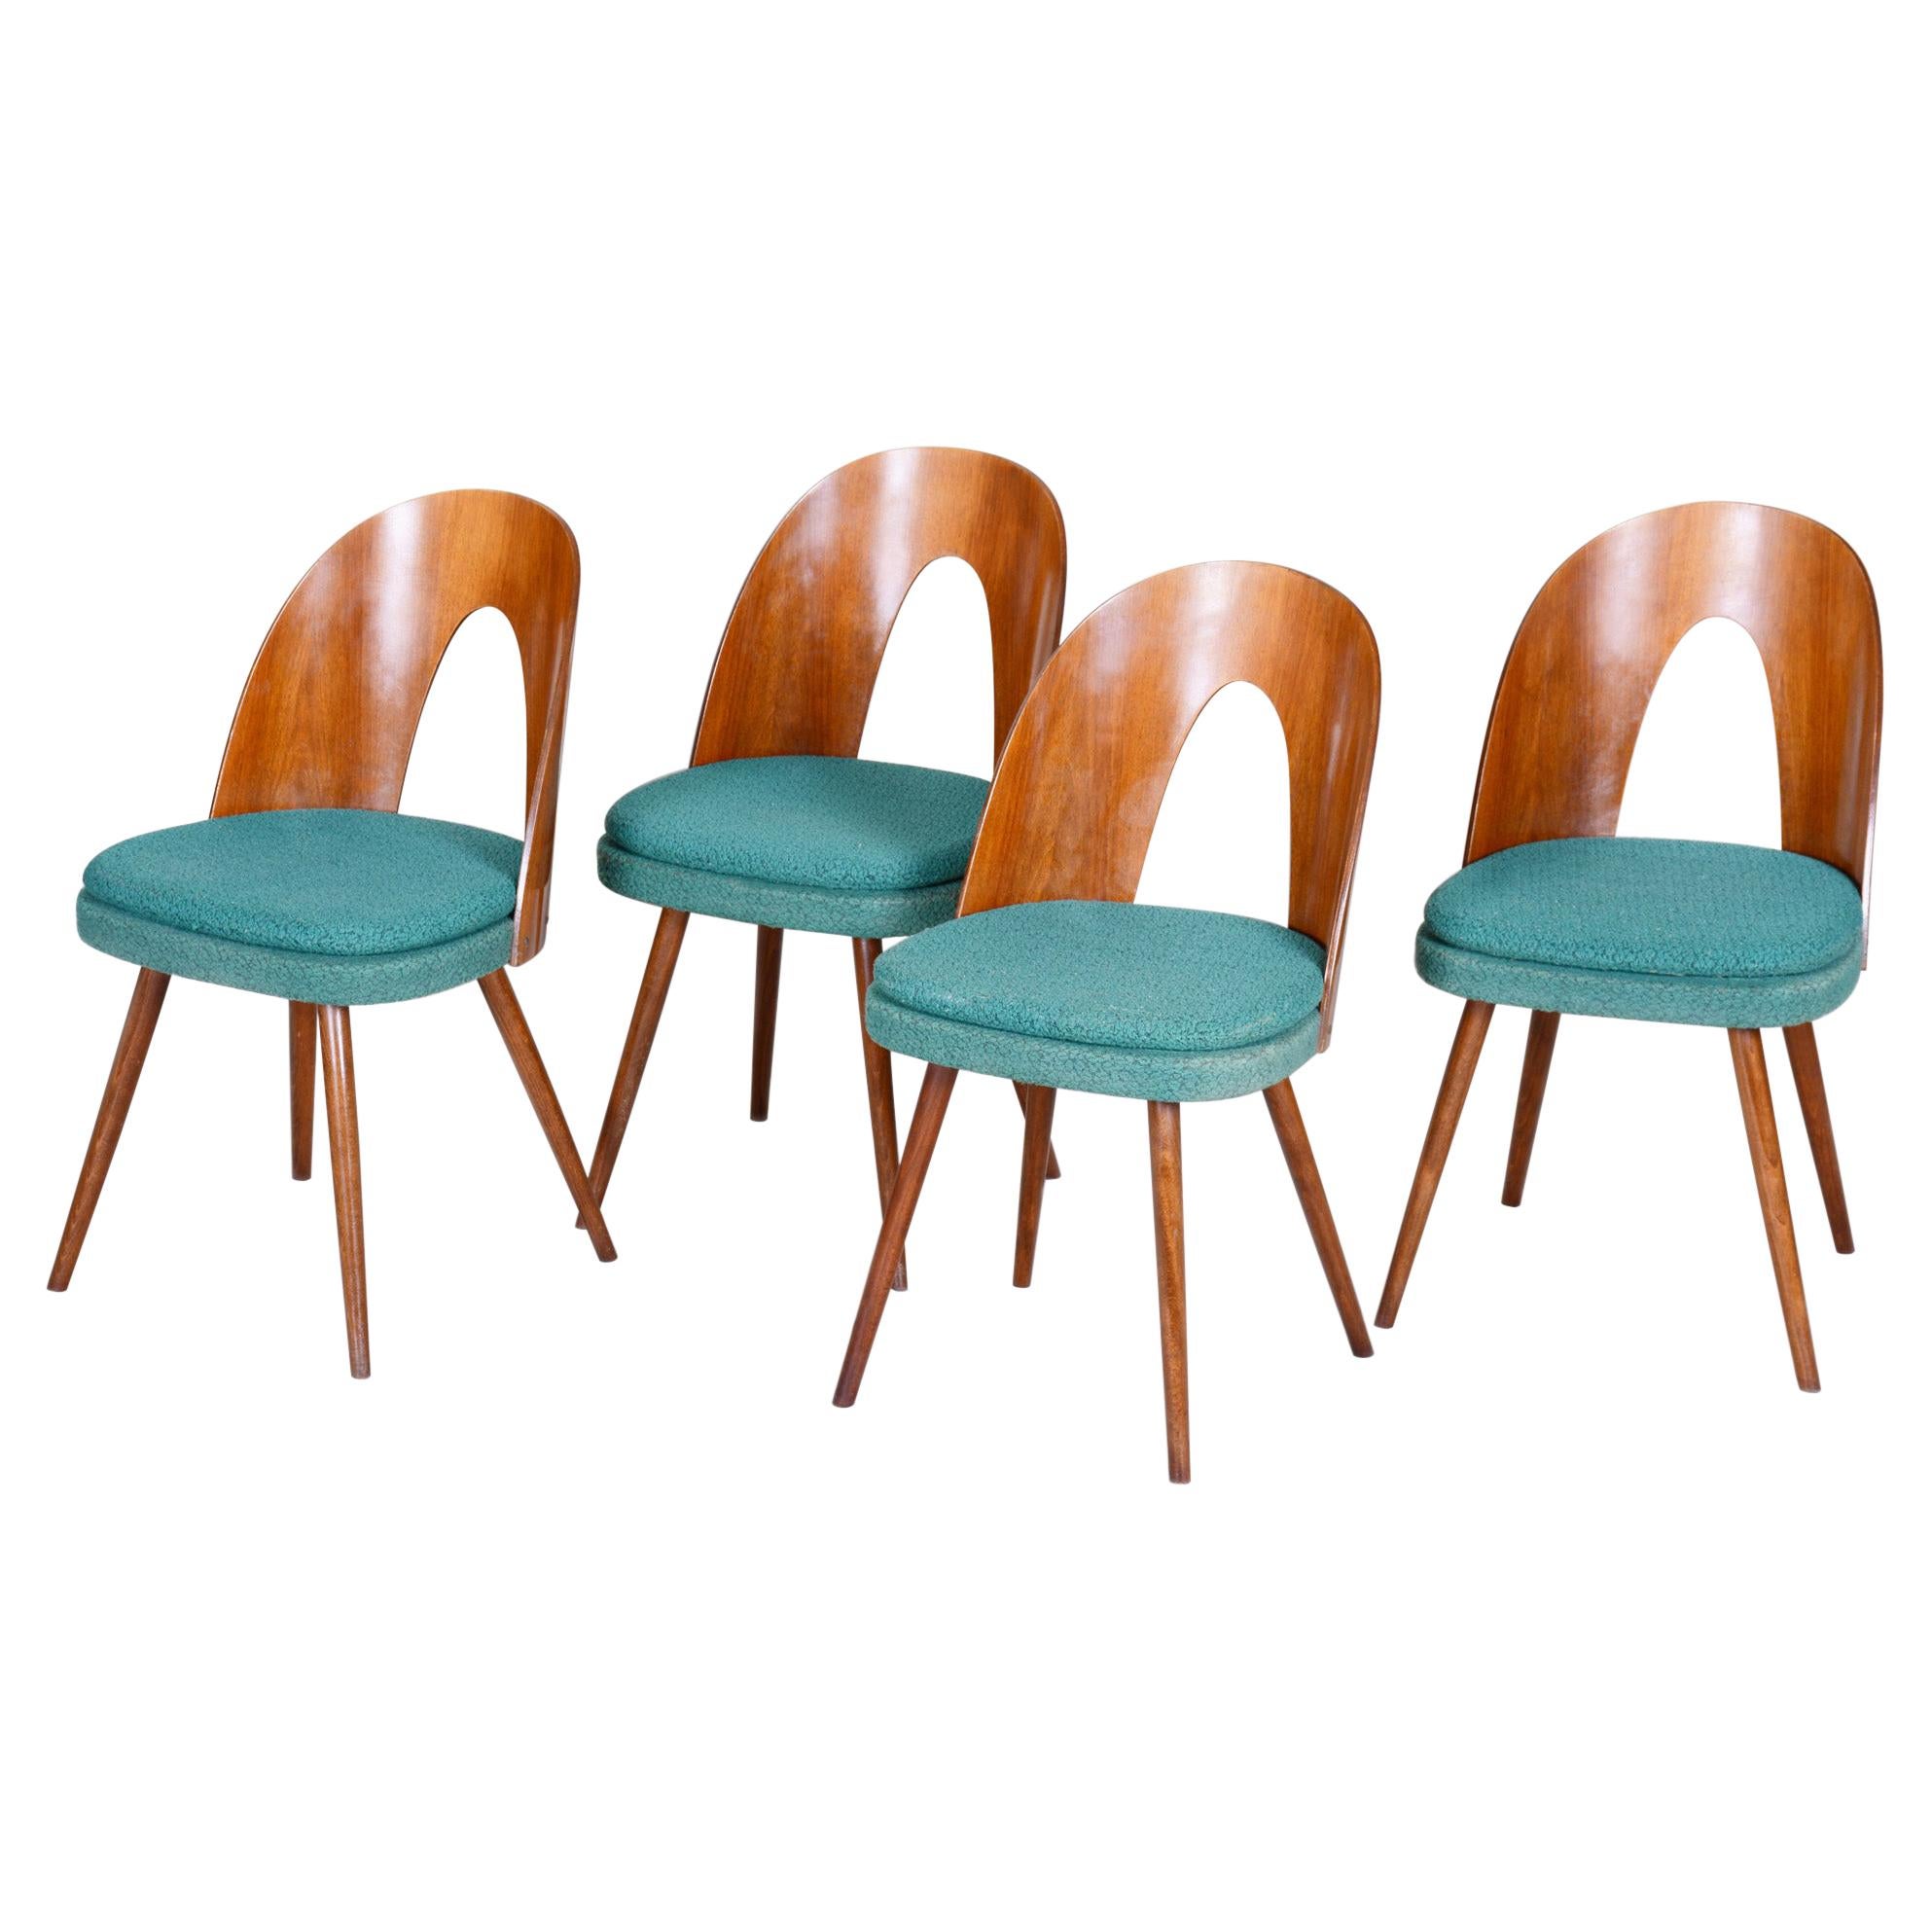 Well Preserved Czech Blue and Brown Ash Chairs by Antonín Šuman, 4 Pcs, 1950s